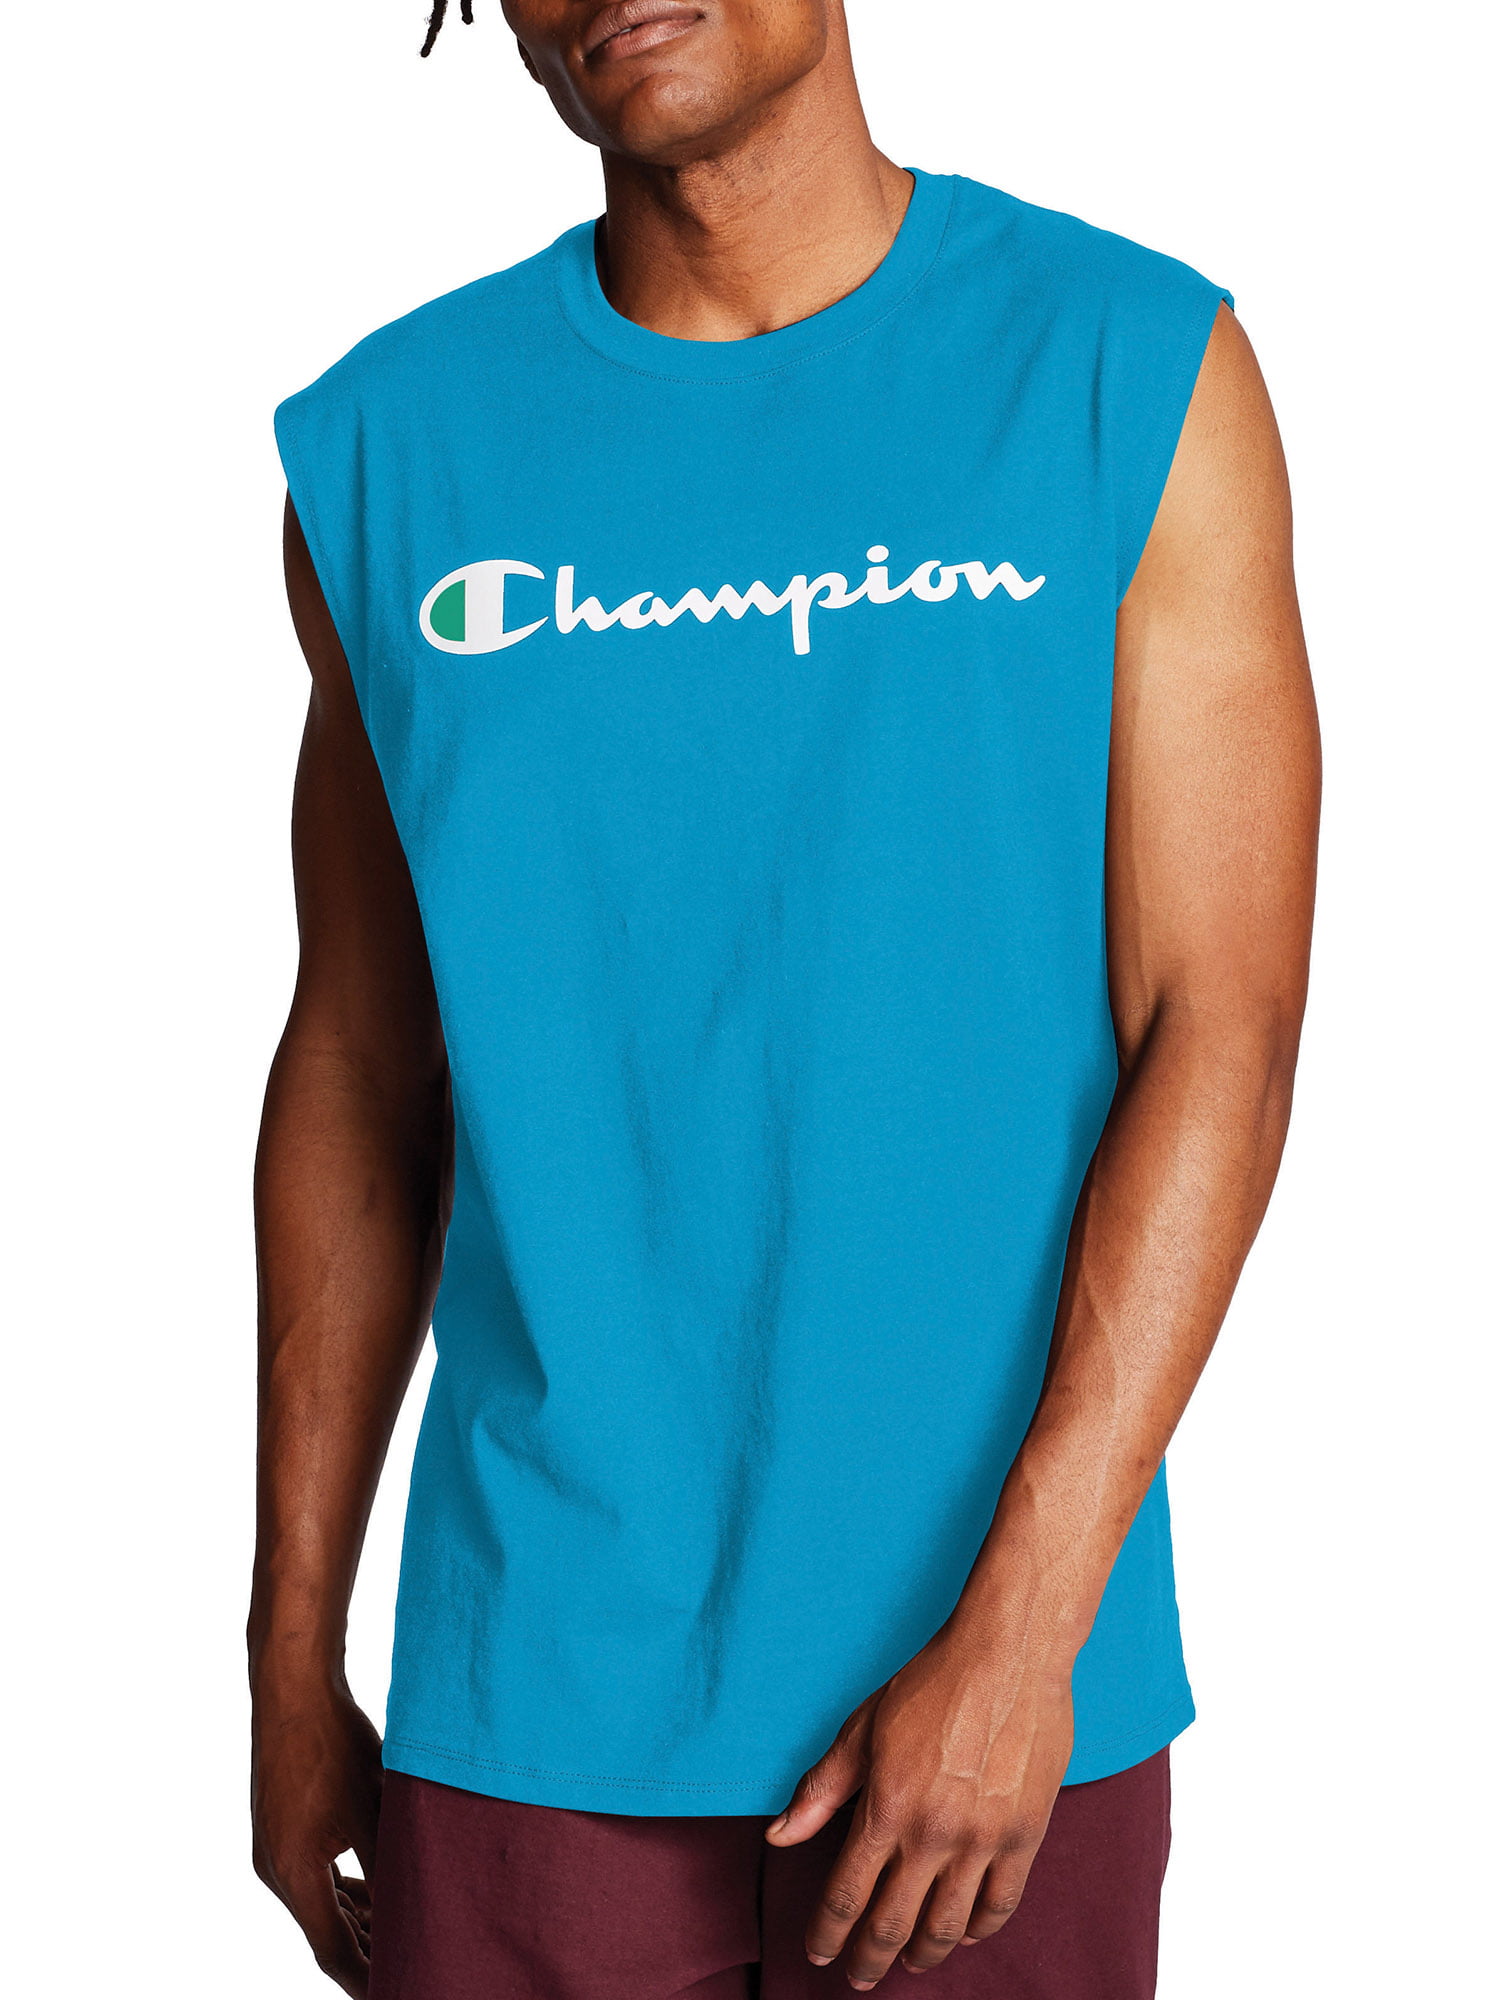 Champion - Champion Men's Classic Jersey Muscle Tee - Walmart.com ...